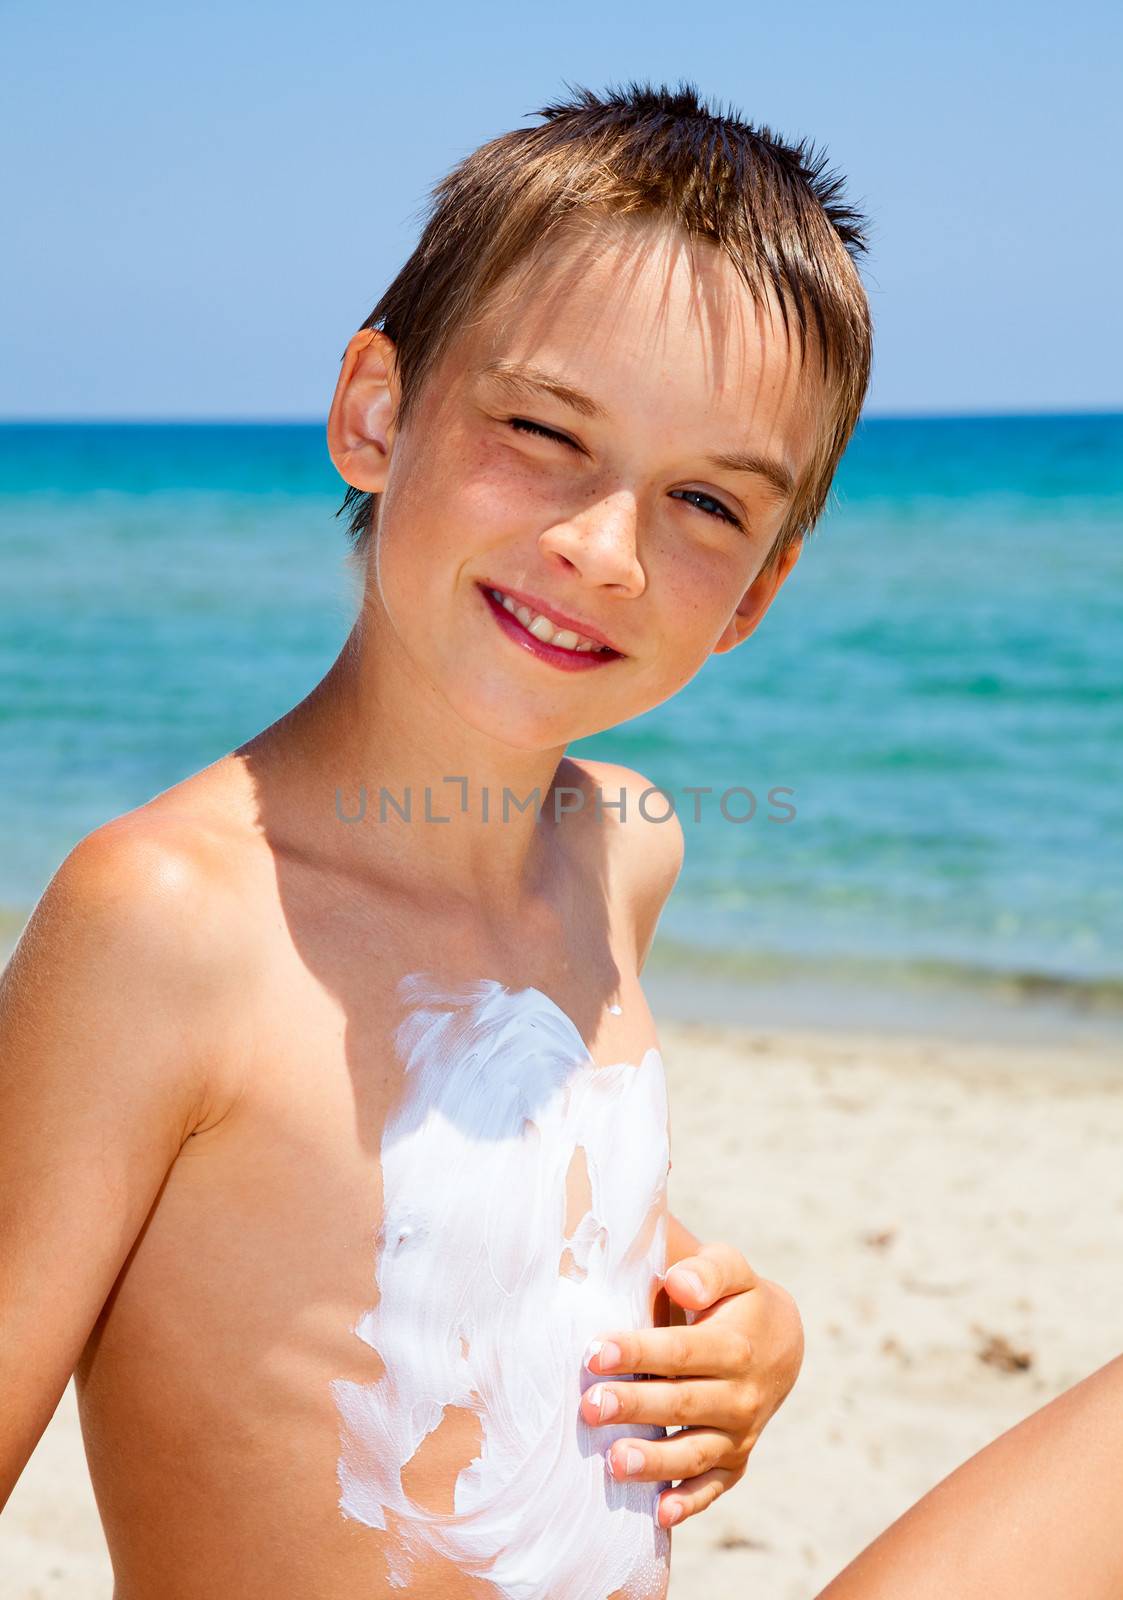 Boy applying sunscreen by naumoid